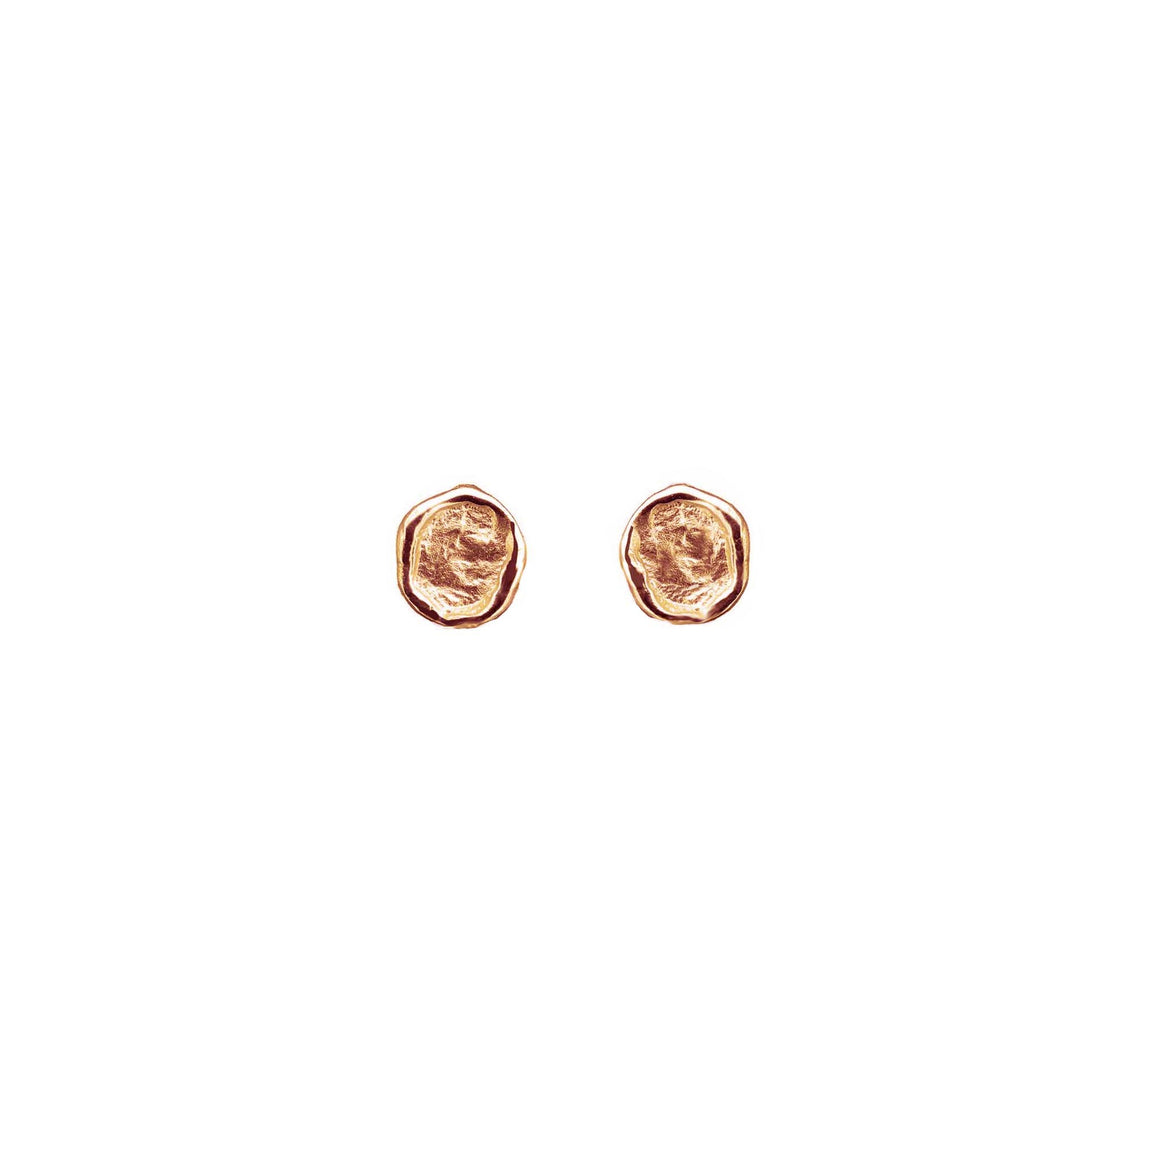 Petite rose gold stud earrings